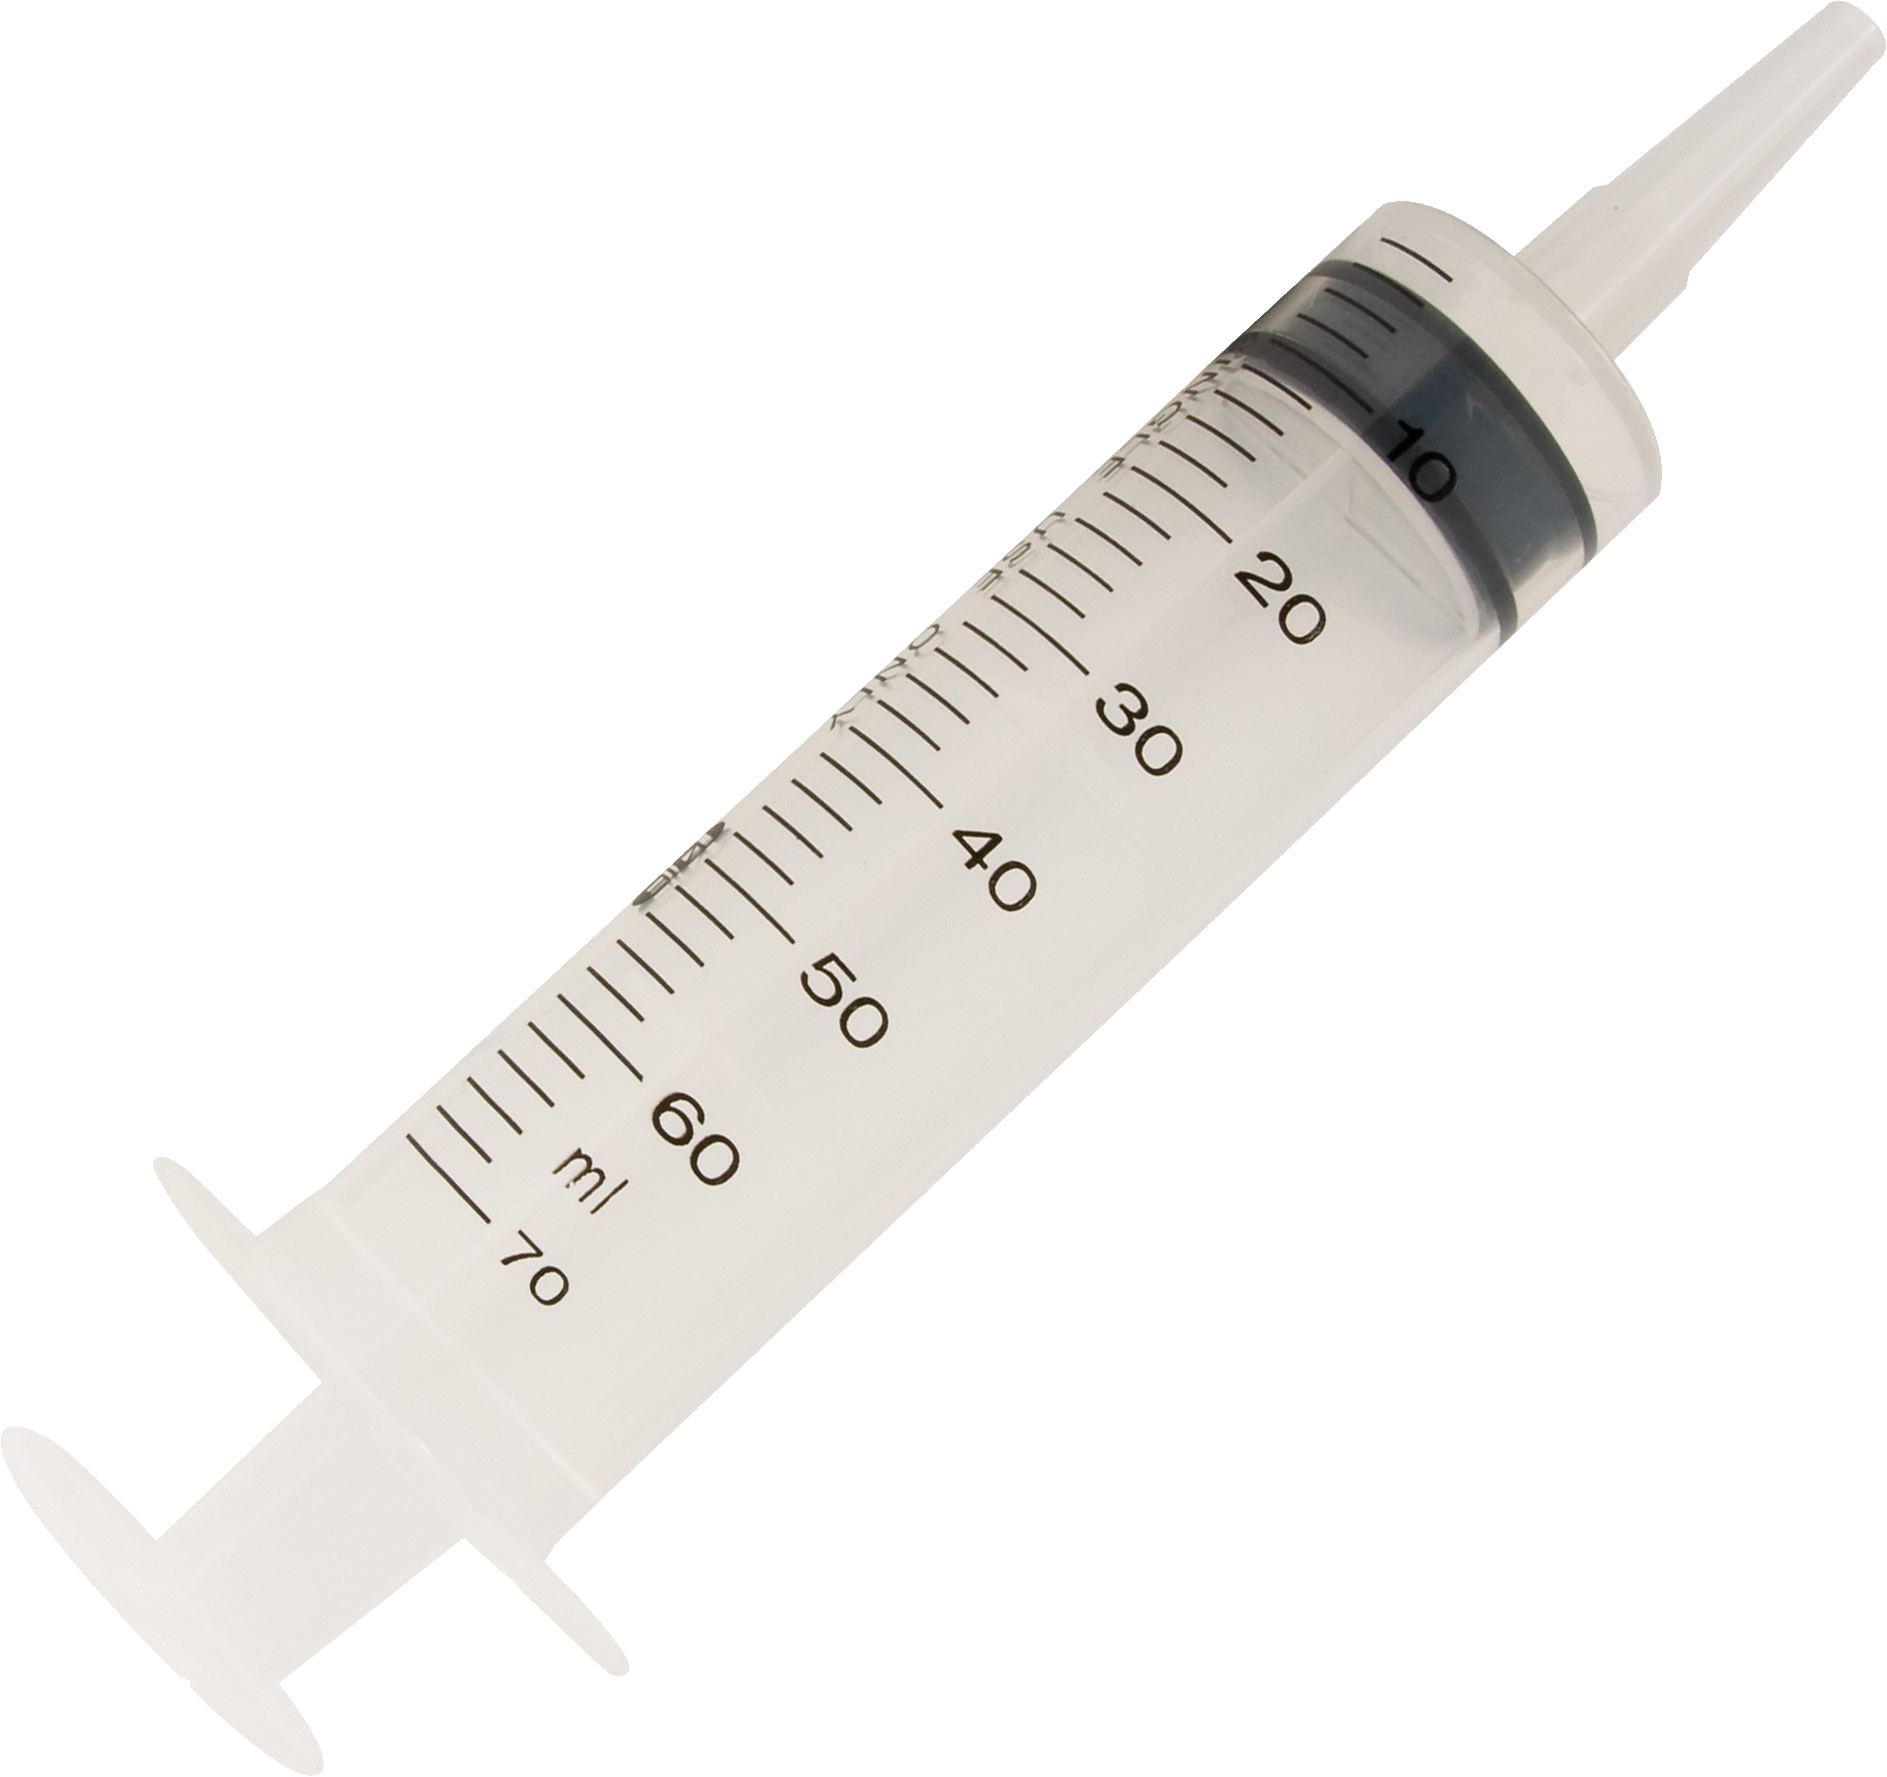 A Close-up Of A Syringe